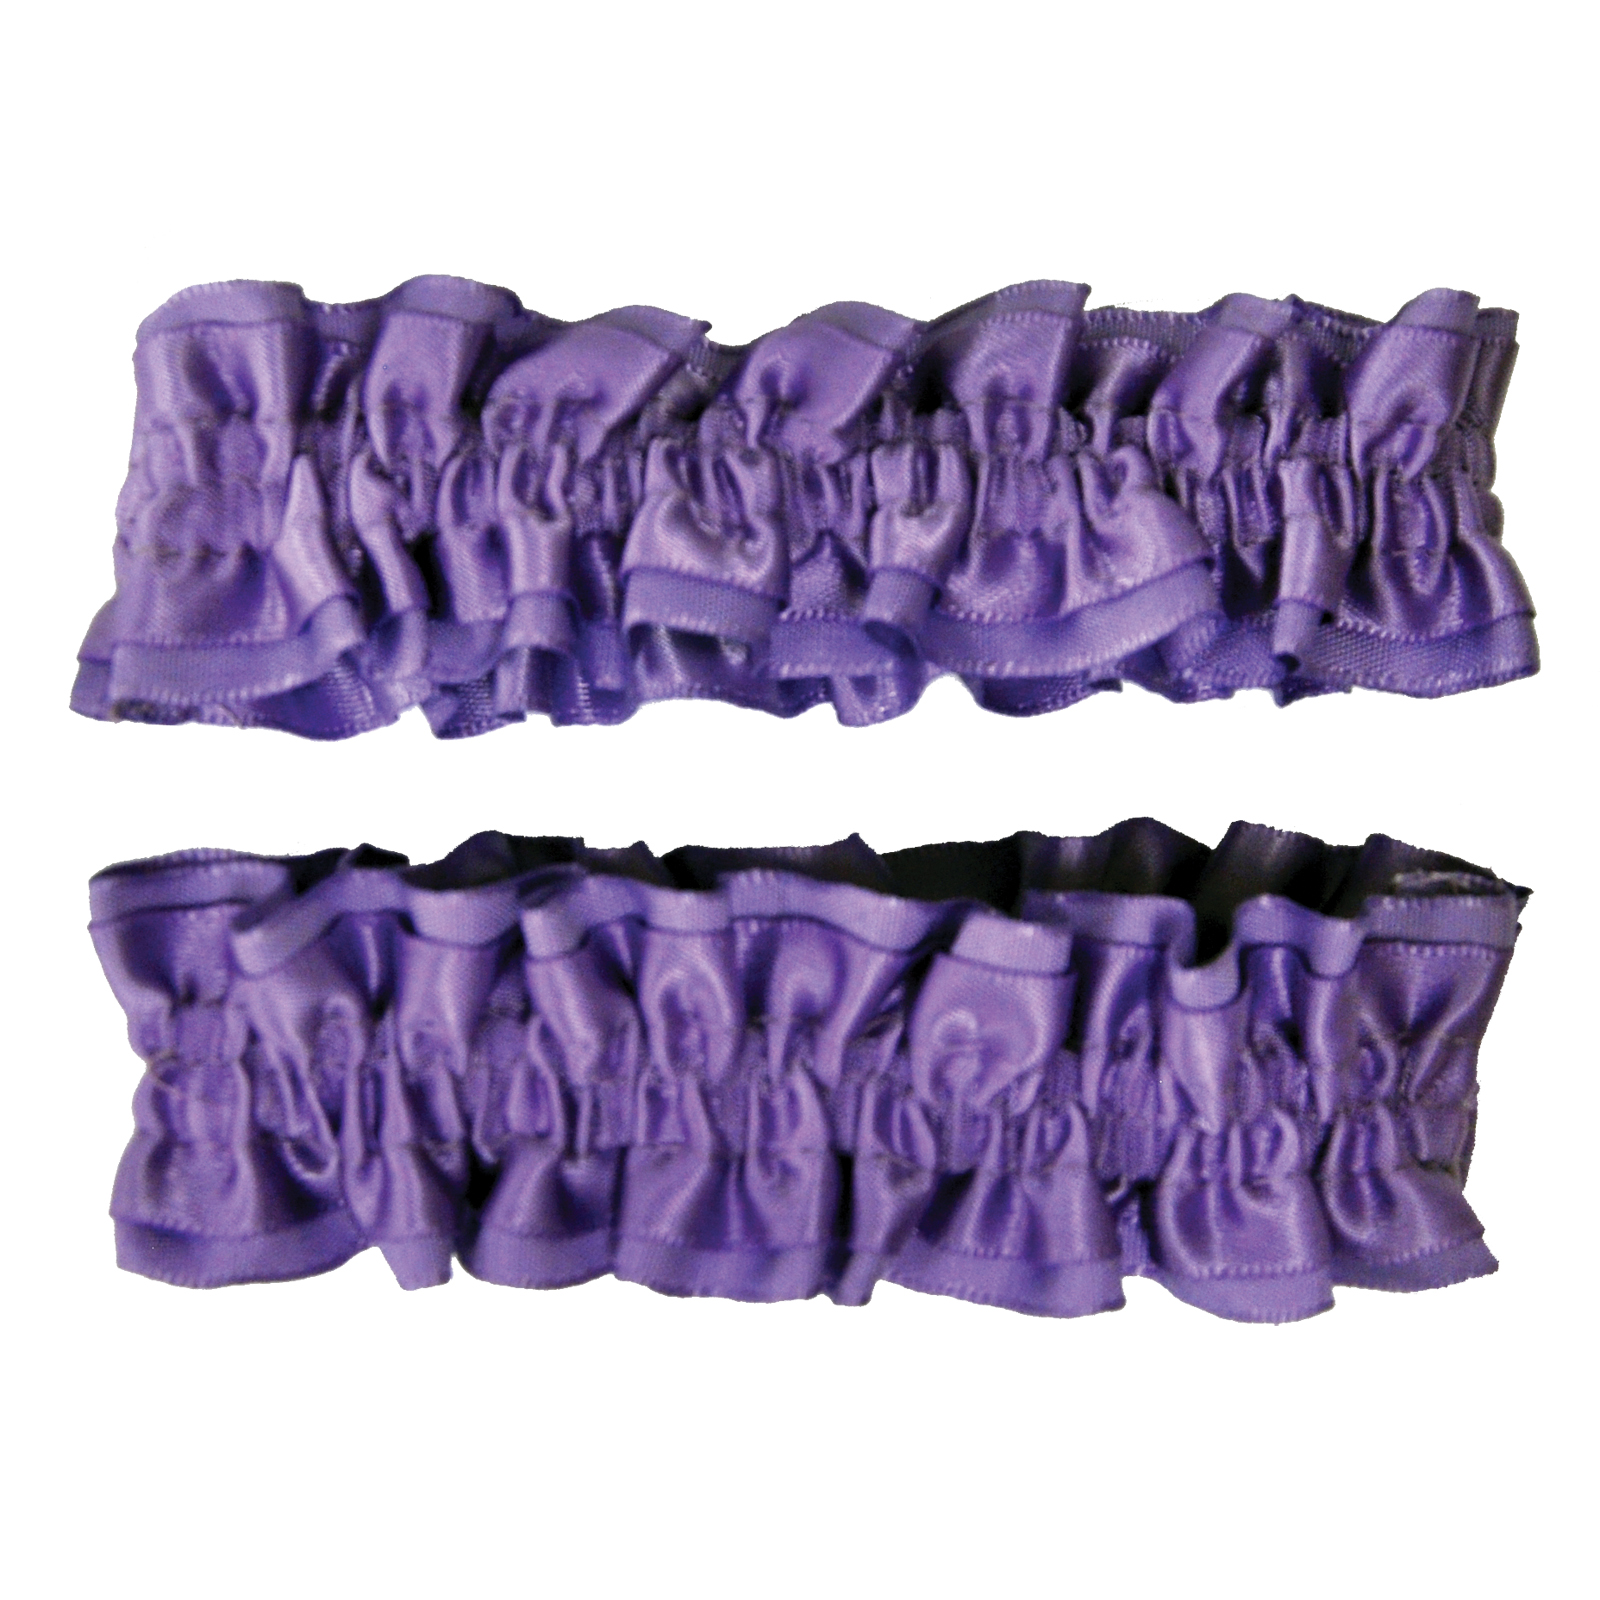 Armband Garters Purple Pair Costume Accessory